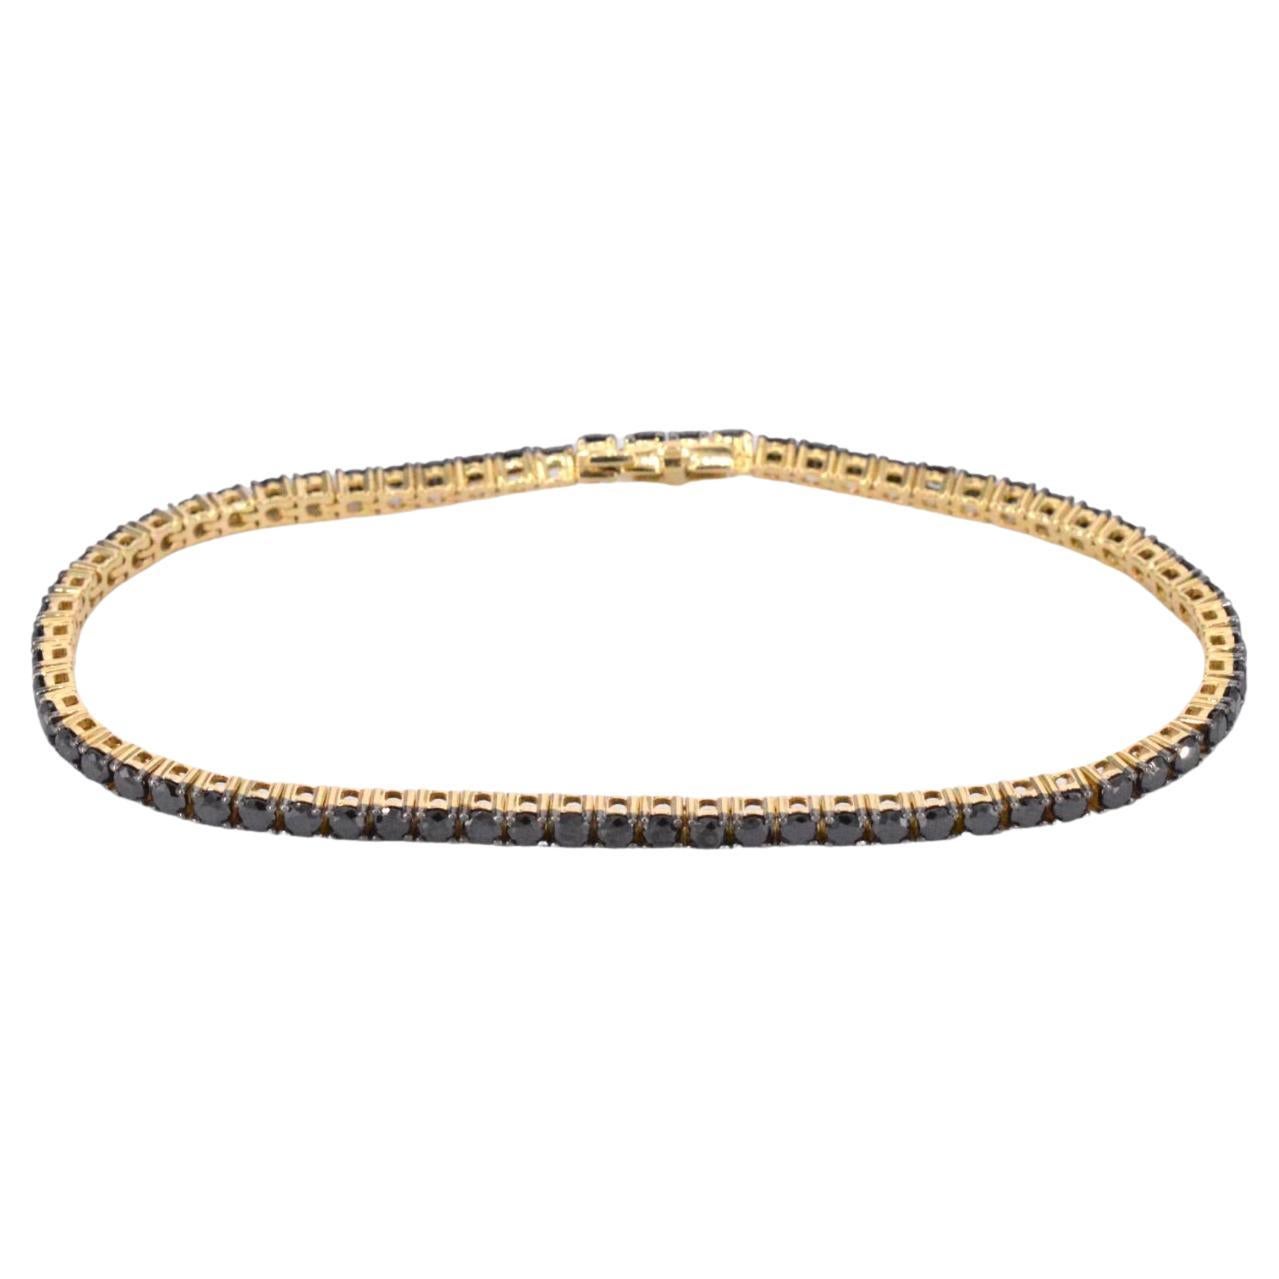 Gold tennis bracelet set with black diamonds